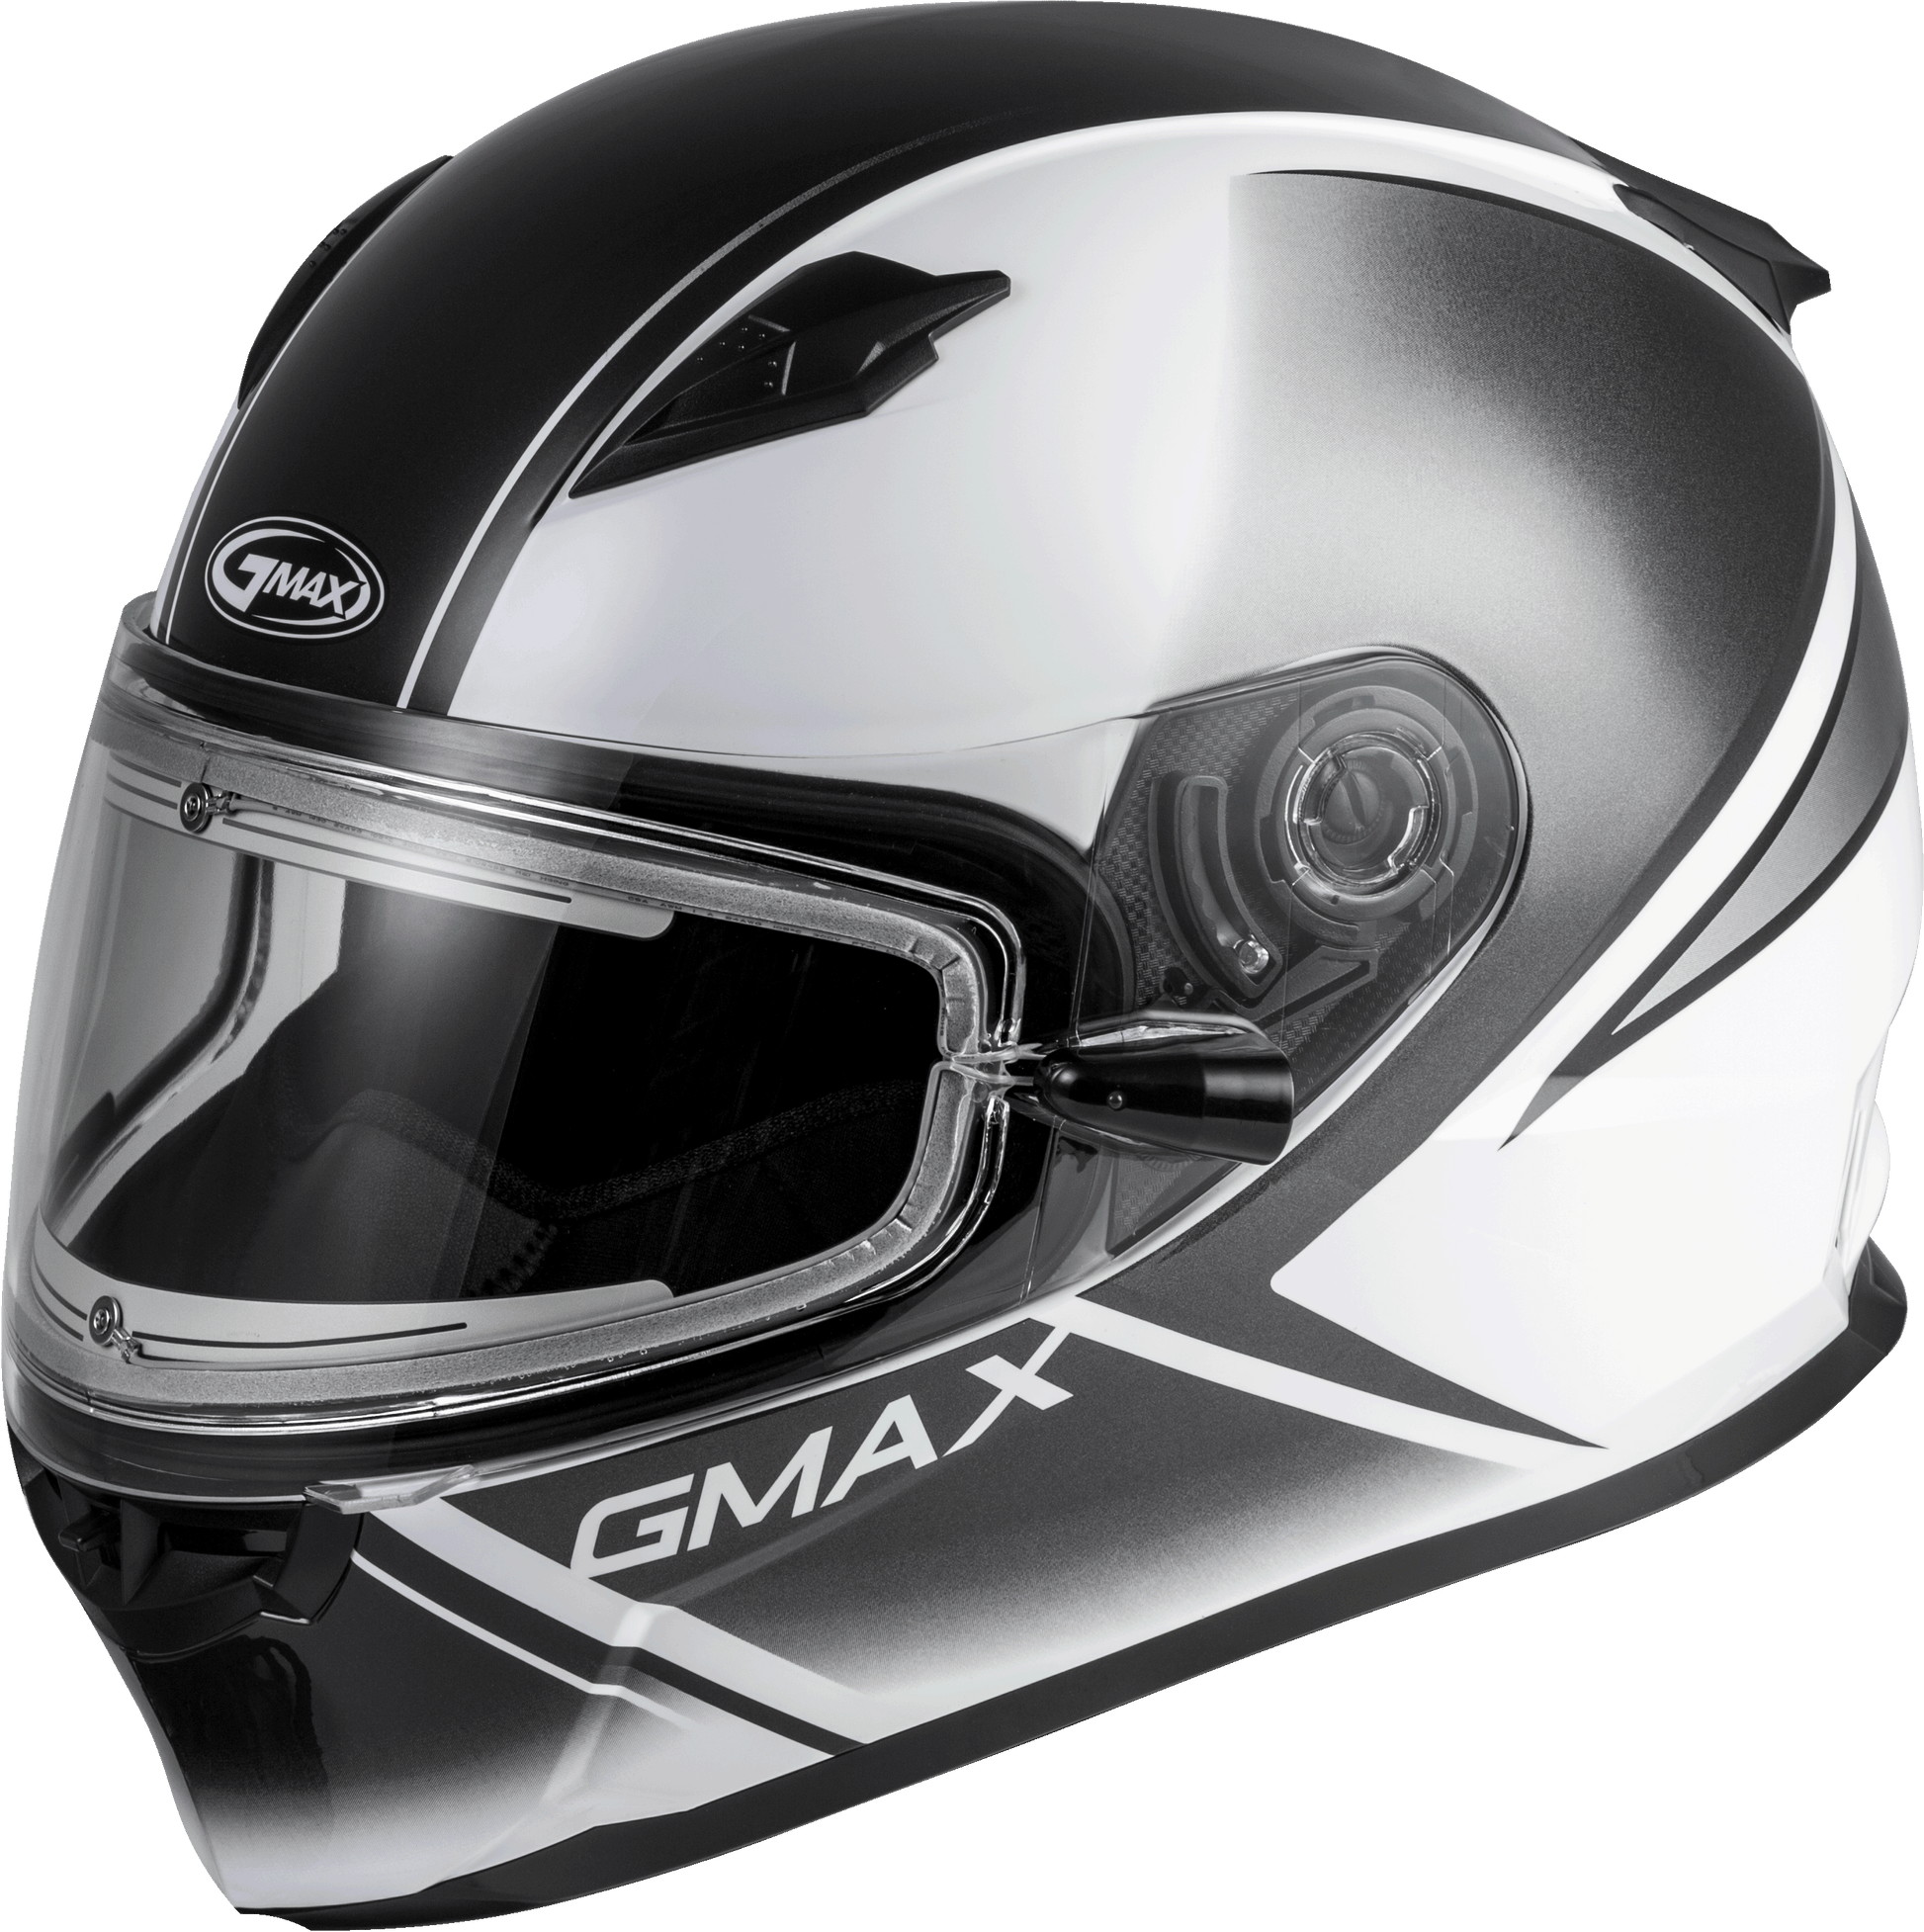 Gmax E72-6330 FF-49S 'Hail' Snow Helmet W/Electric Shield White/Black